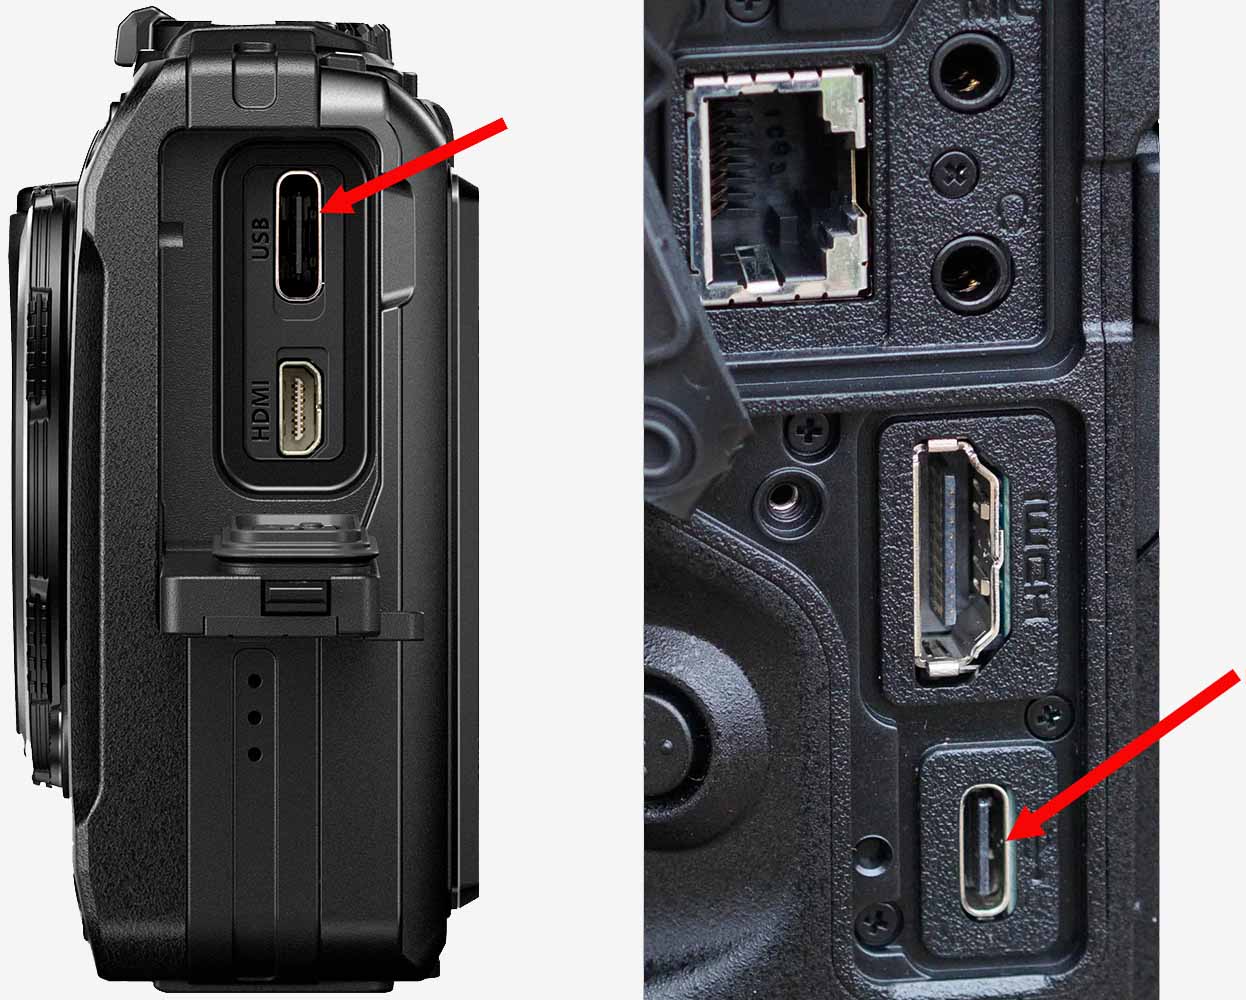 New USB-C port in an olympus camera